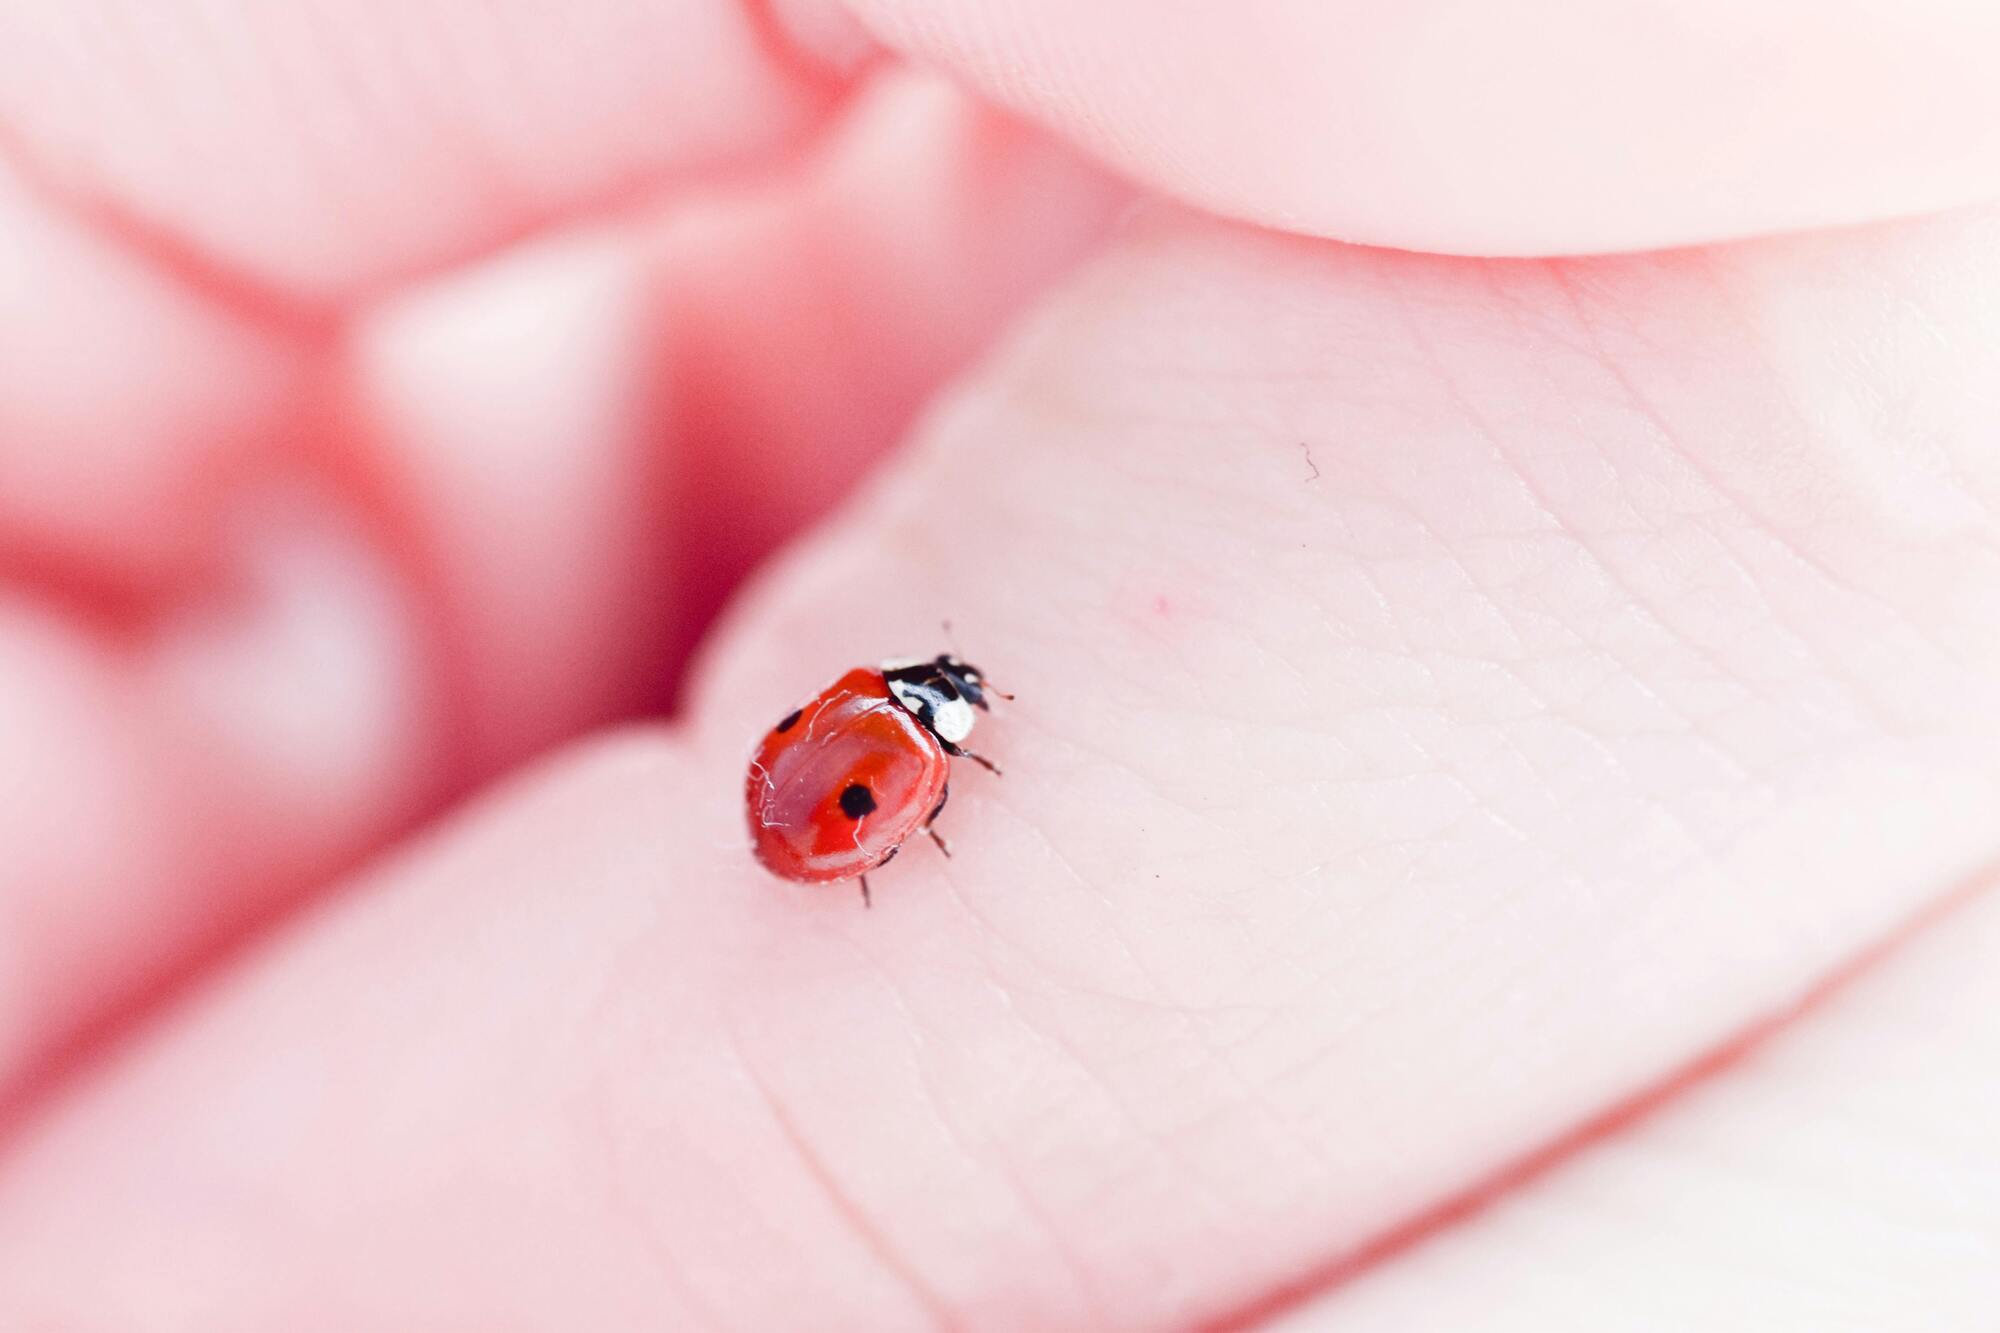 The ladybug is a spirit animal